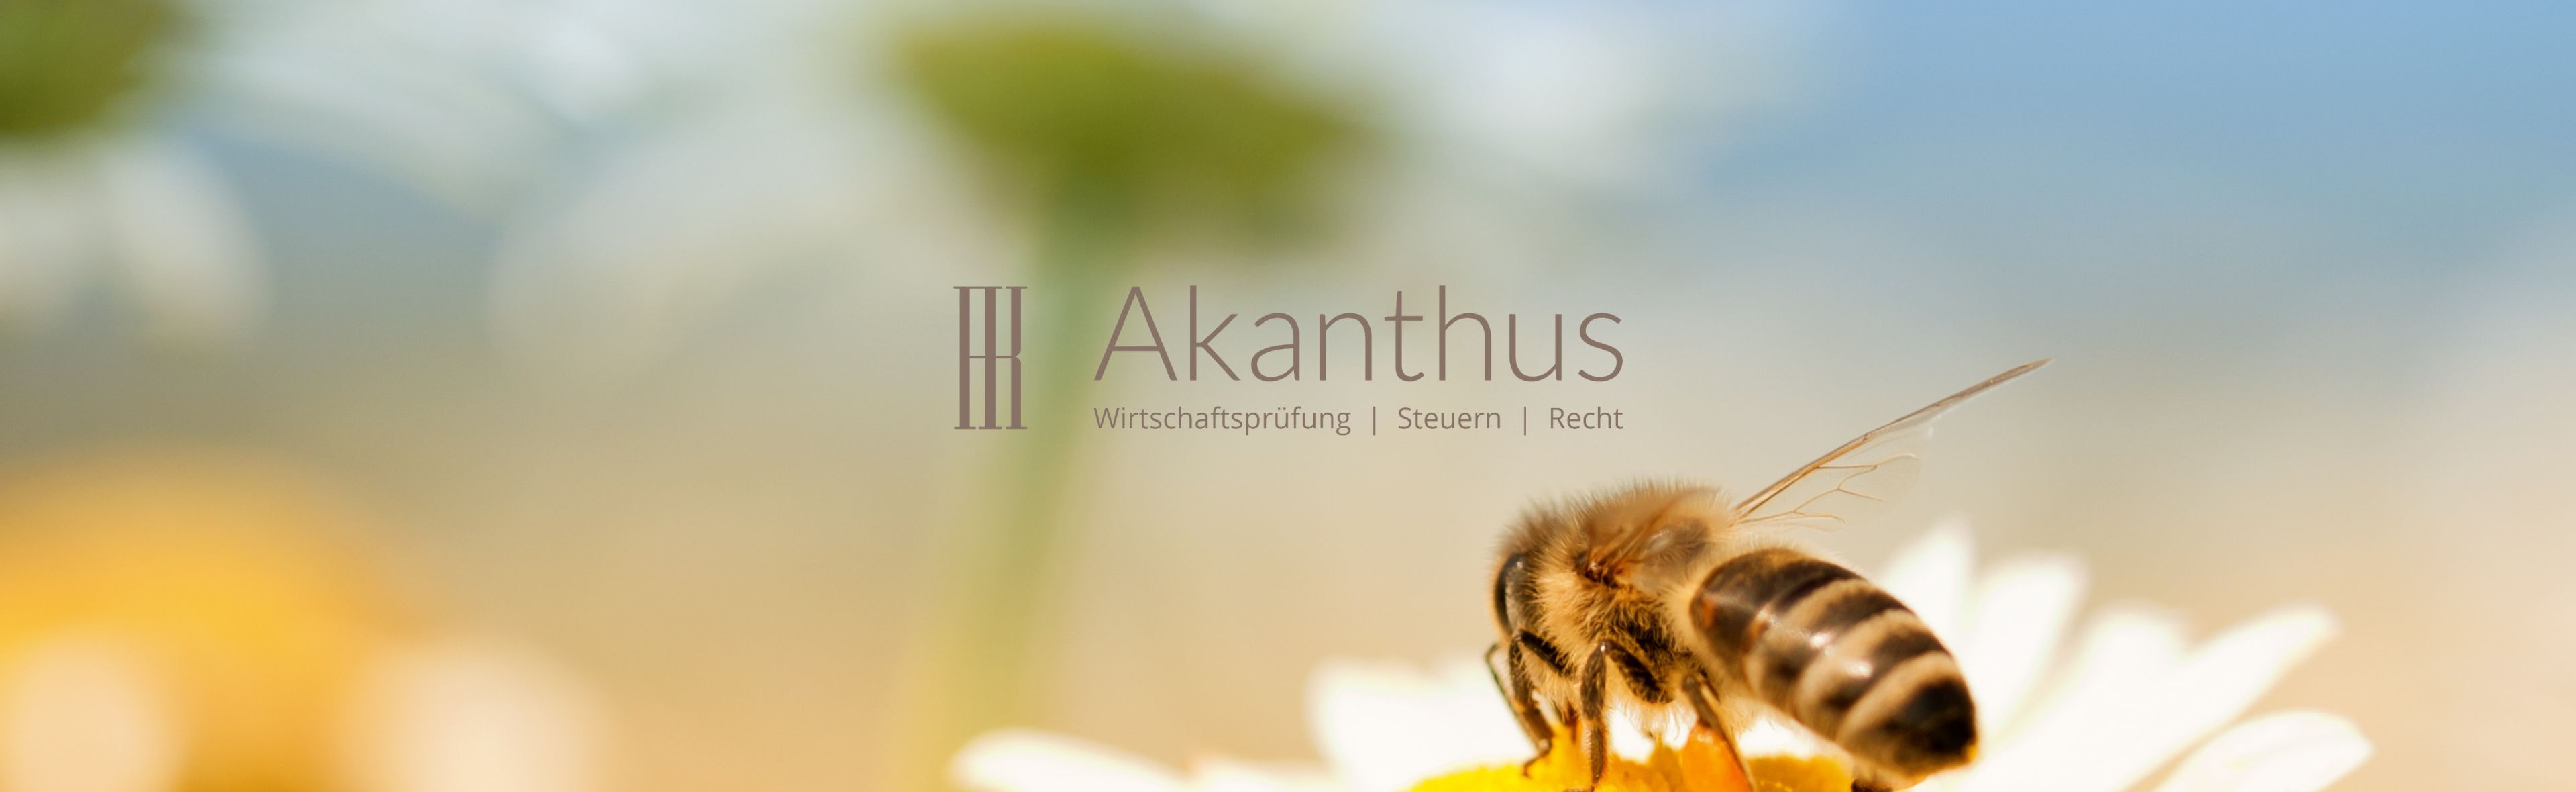 Bienenpatenschaft Akanthus